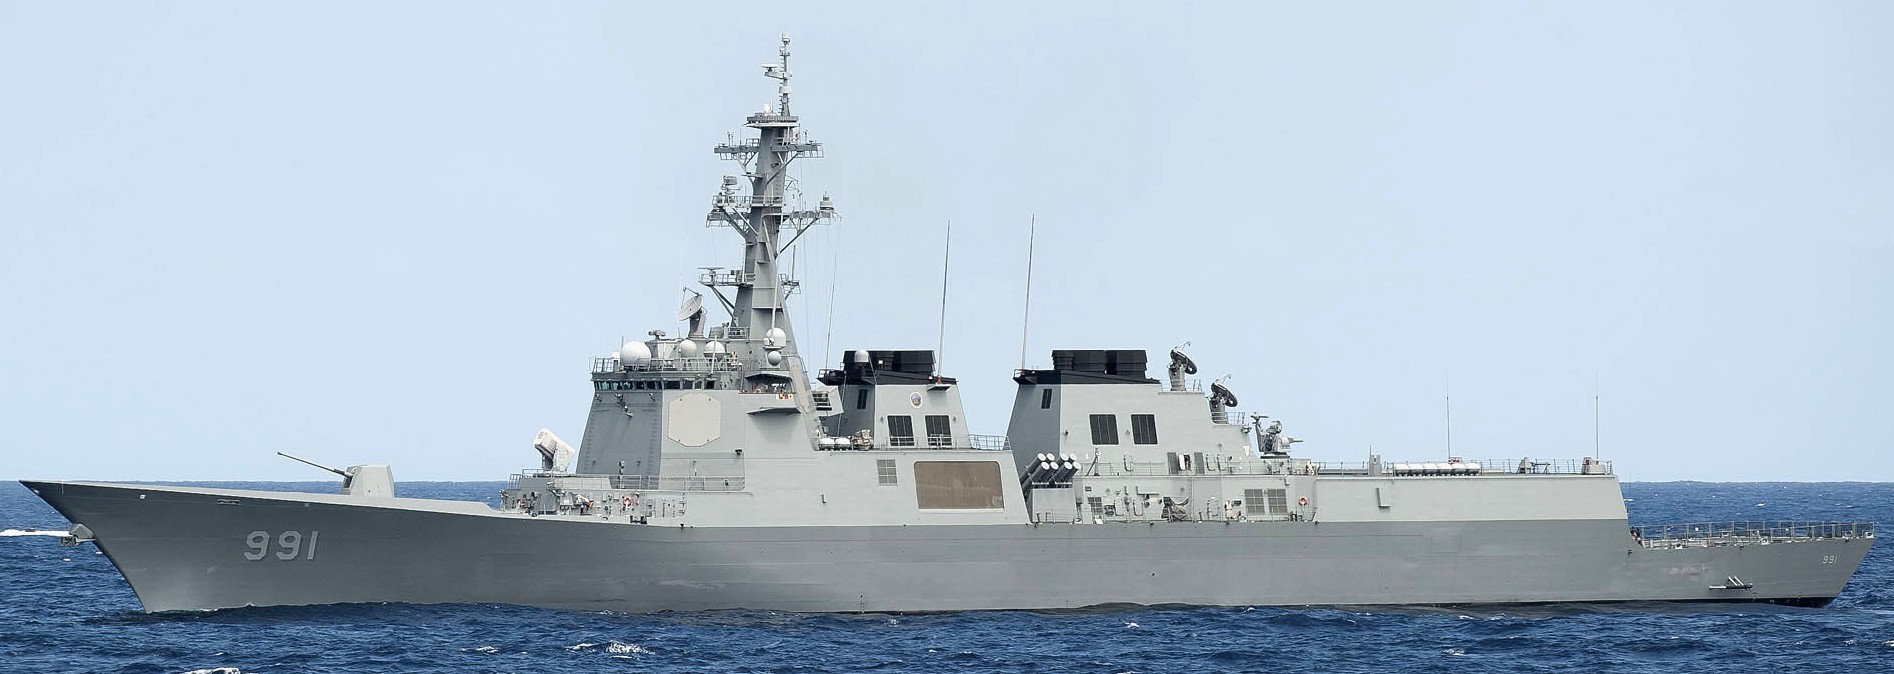 ddg-991 roks sejong the great guided missile destroyer aegis republic of korea navy rok 05